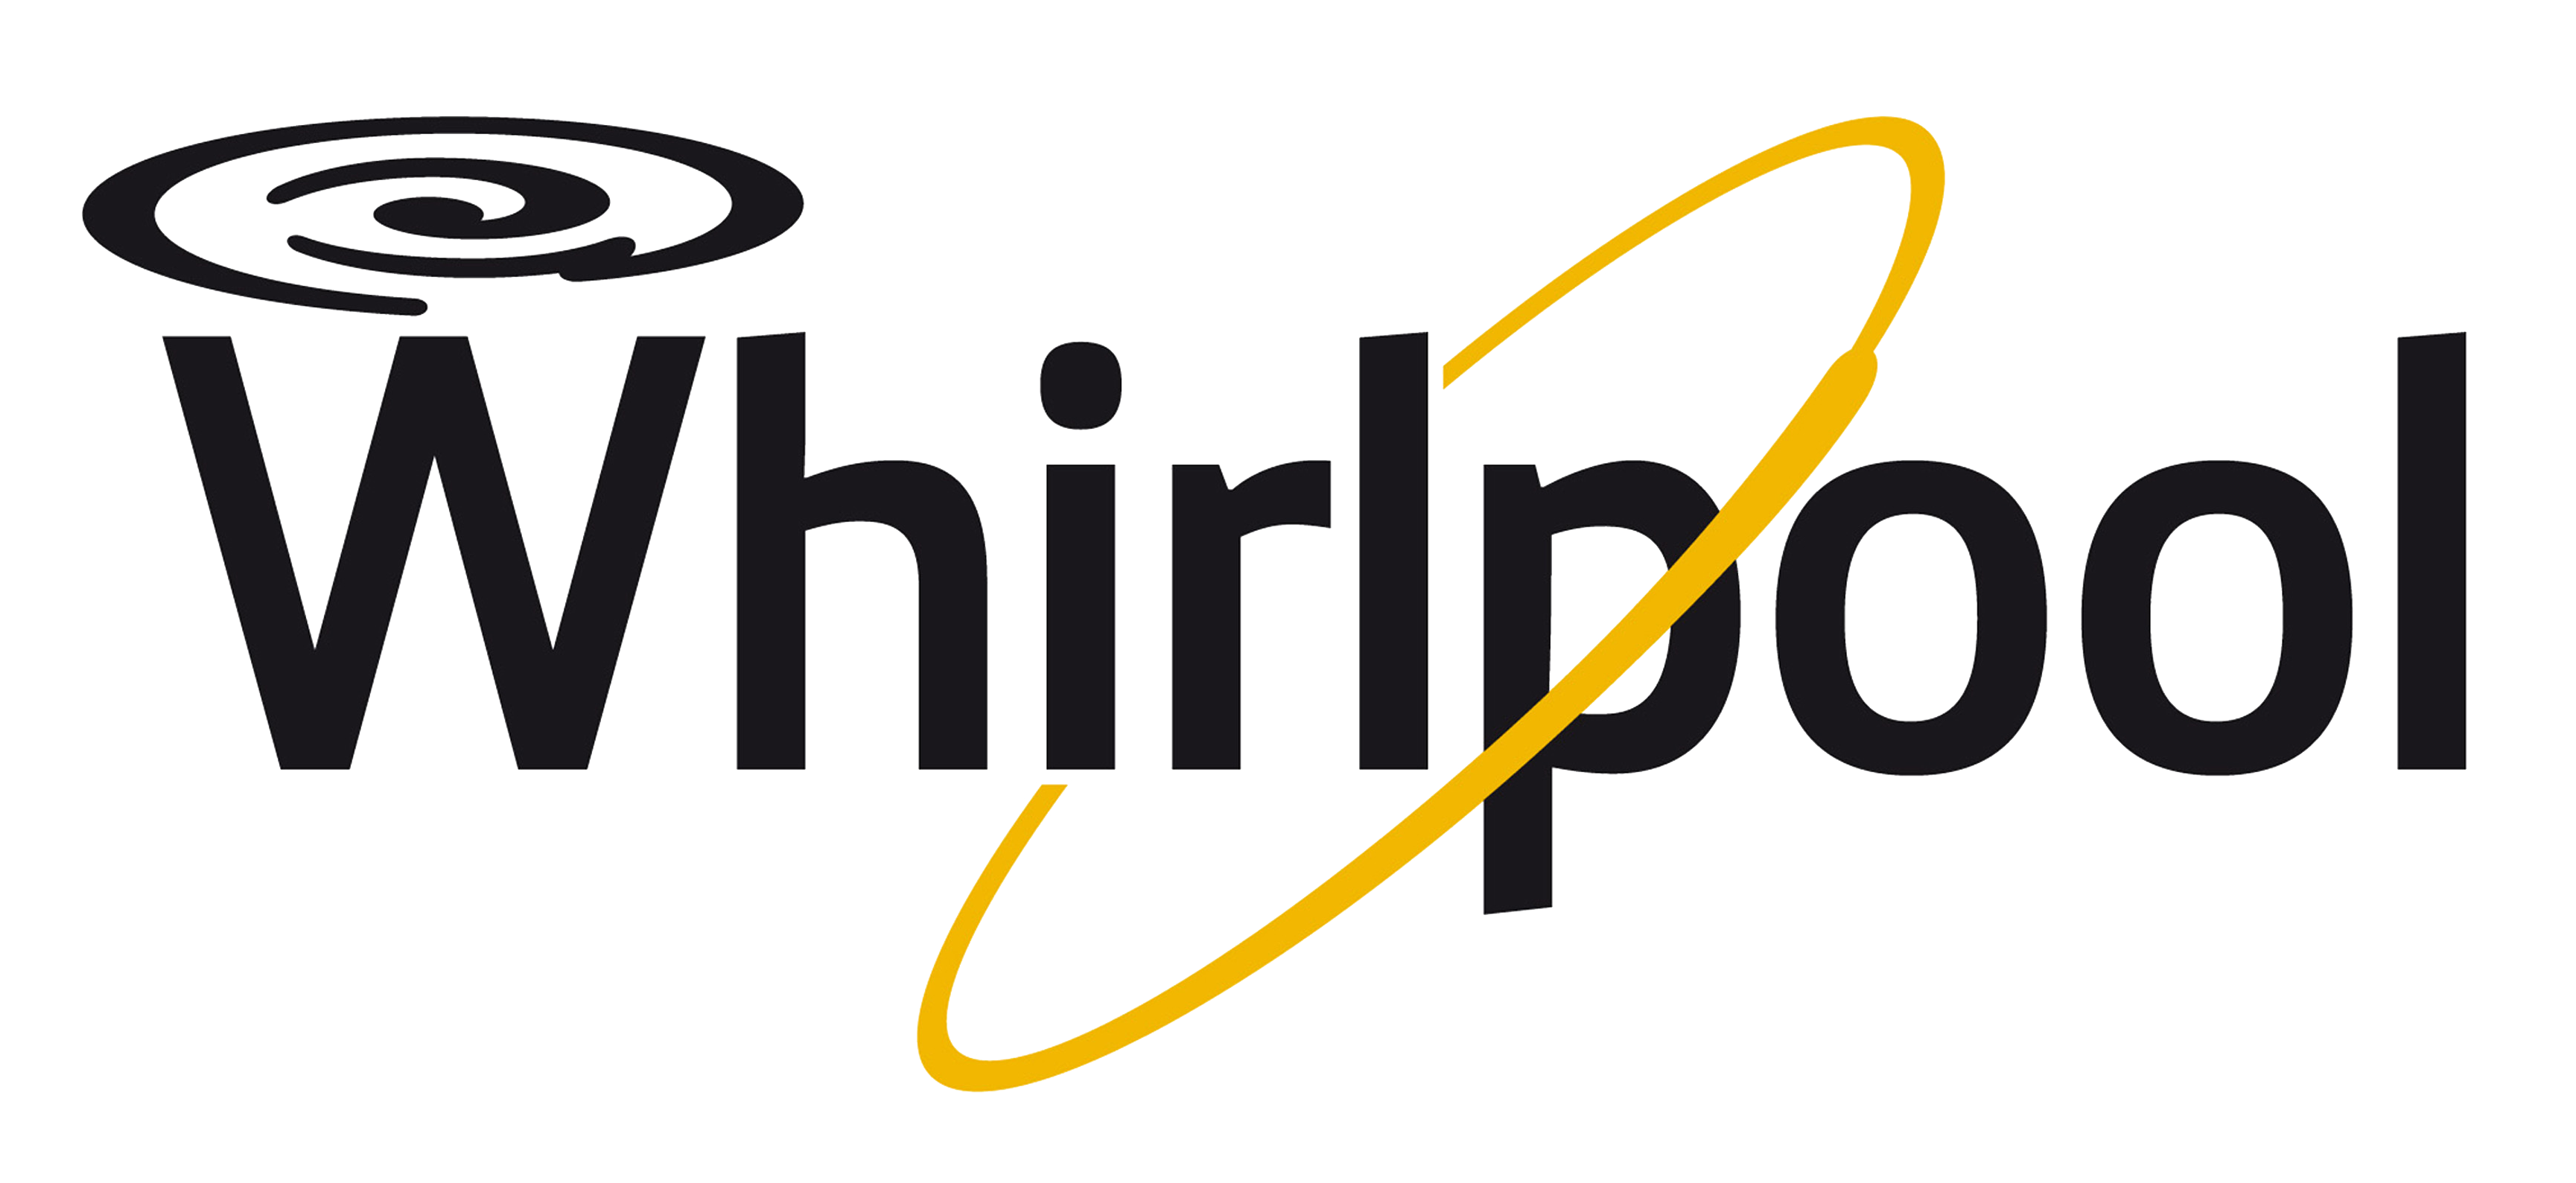 Whirlpool Fridge Repair Company, North Hills, Samsung Refrigerator Service